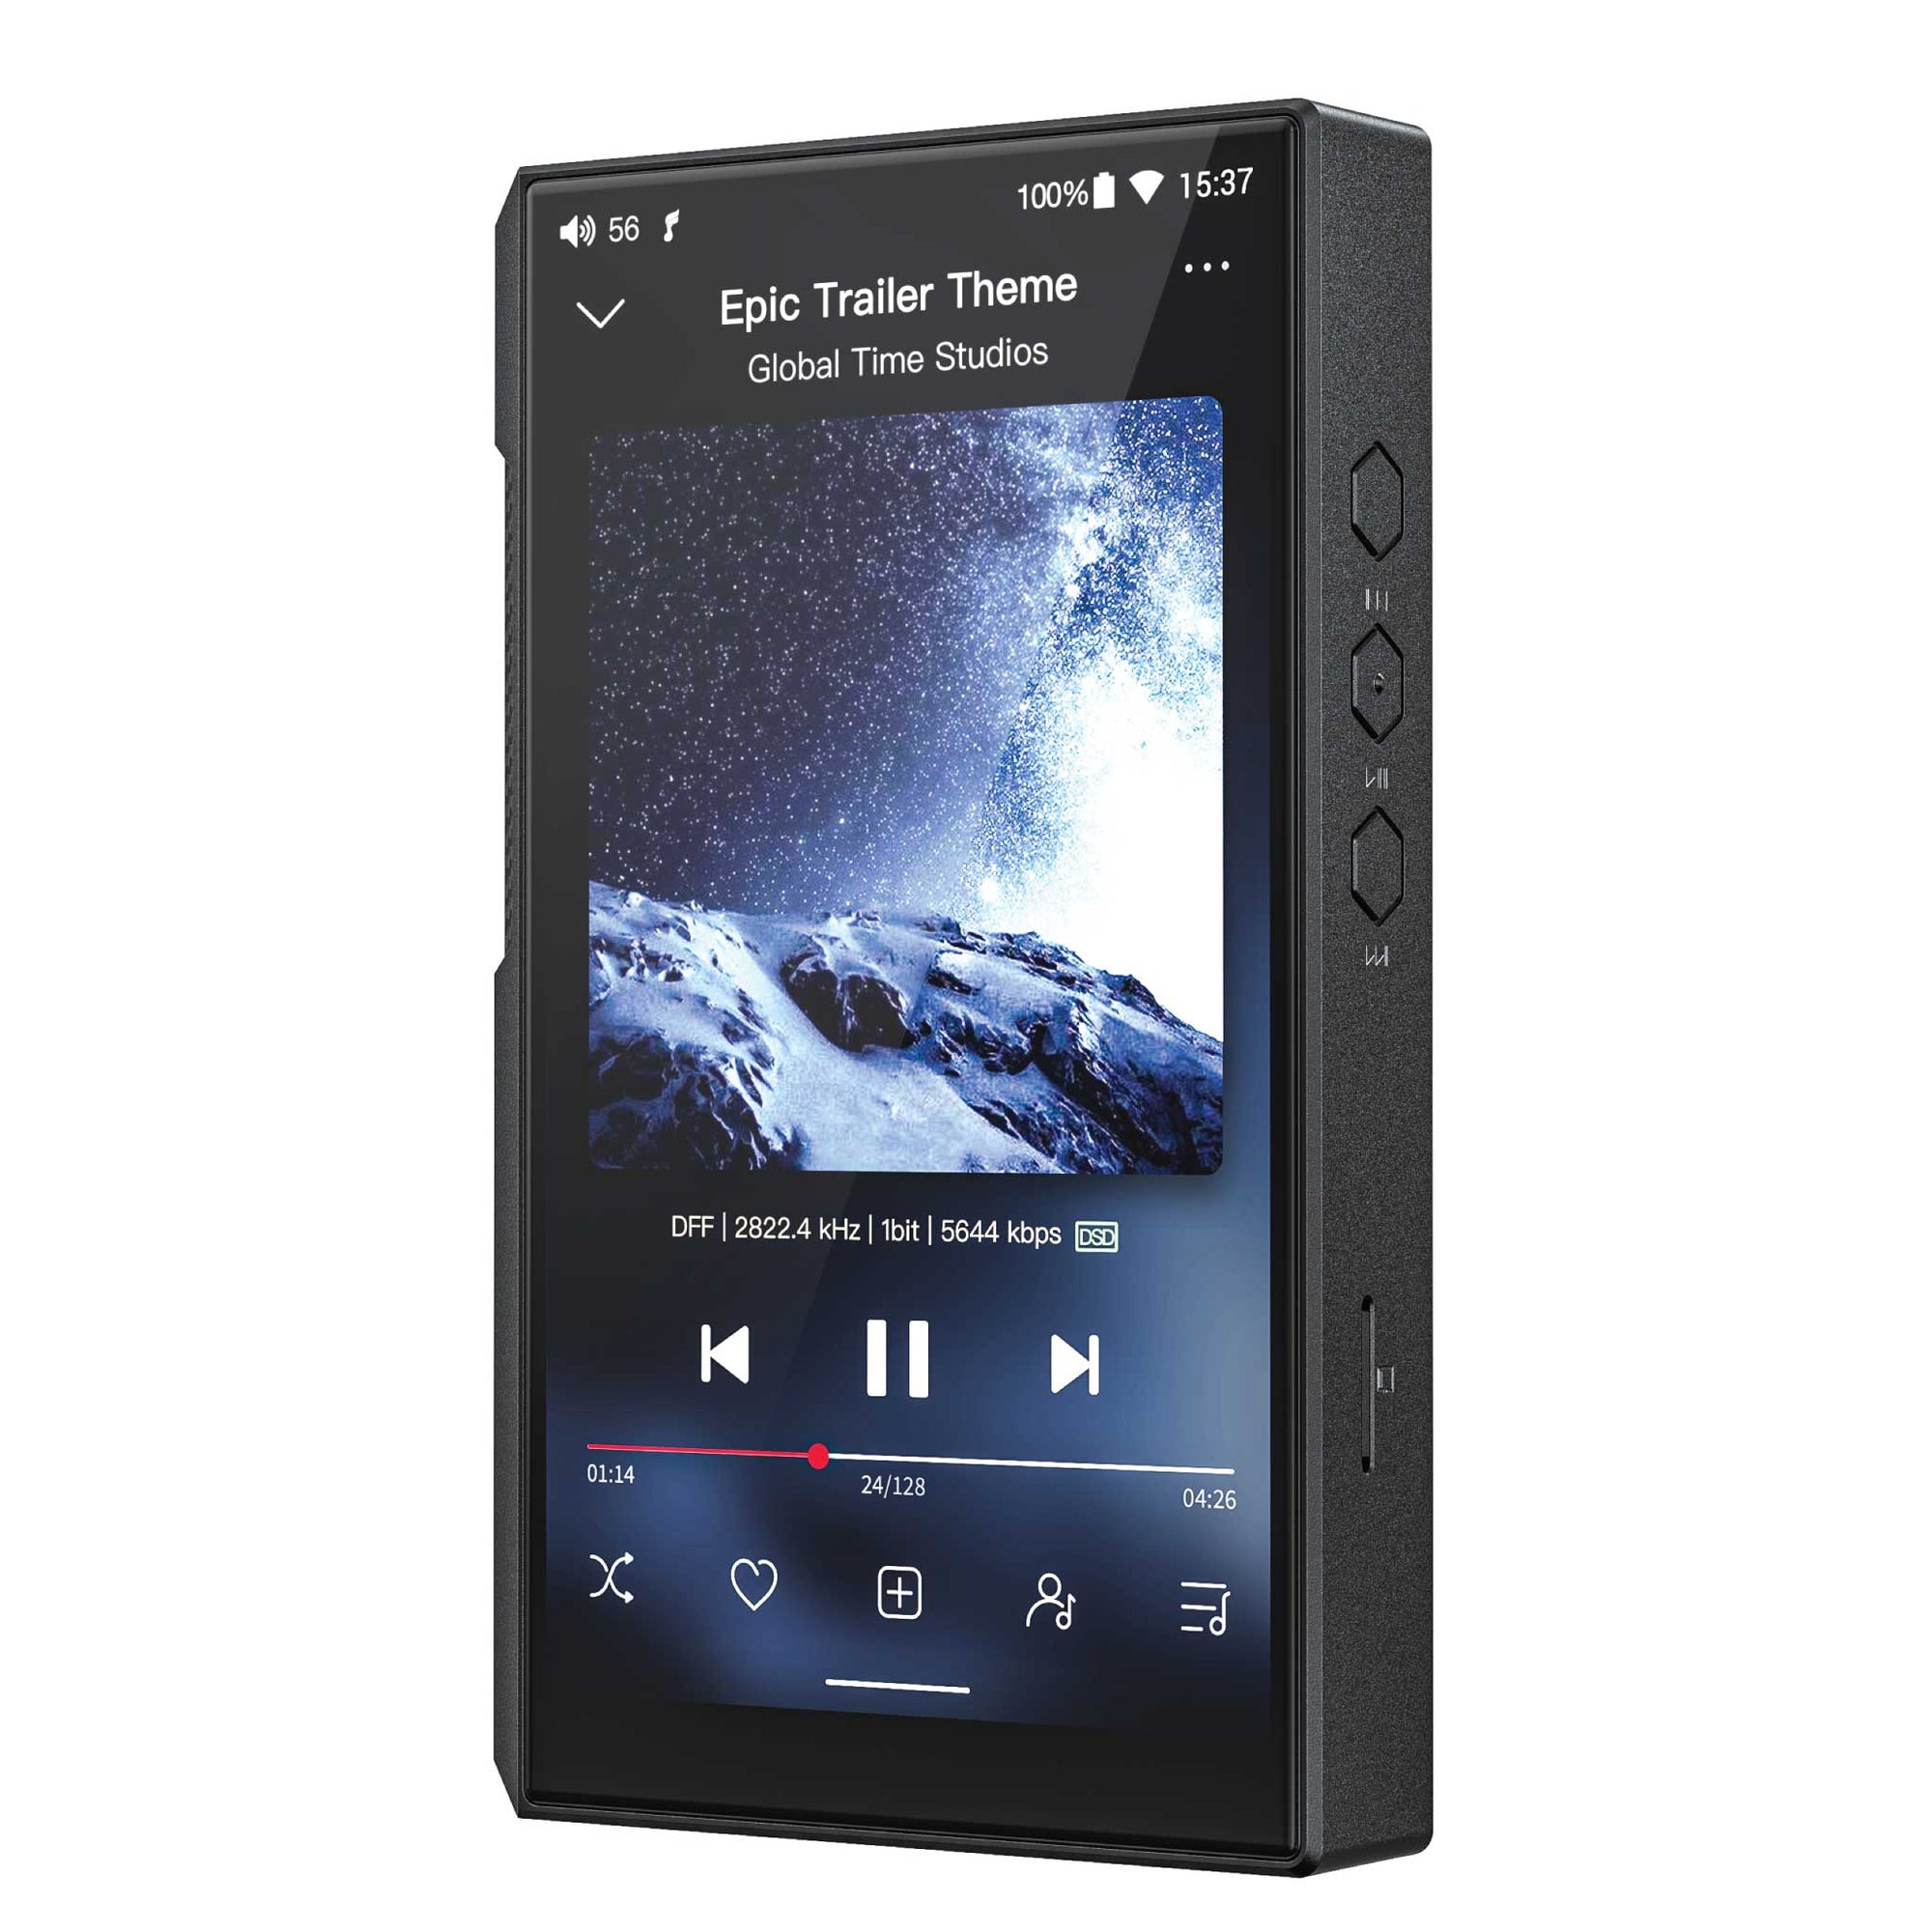 FiiO M11S Portable Music Player